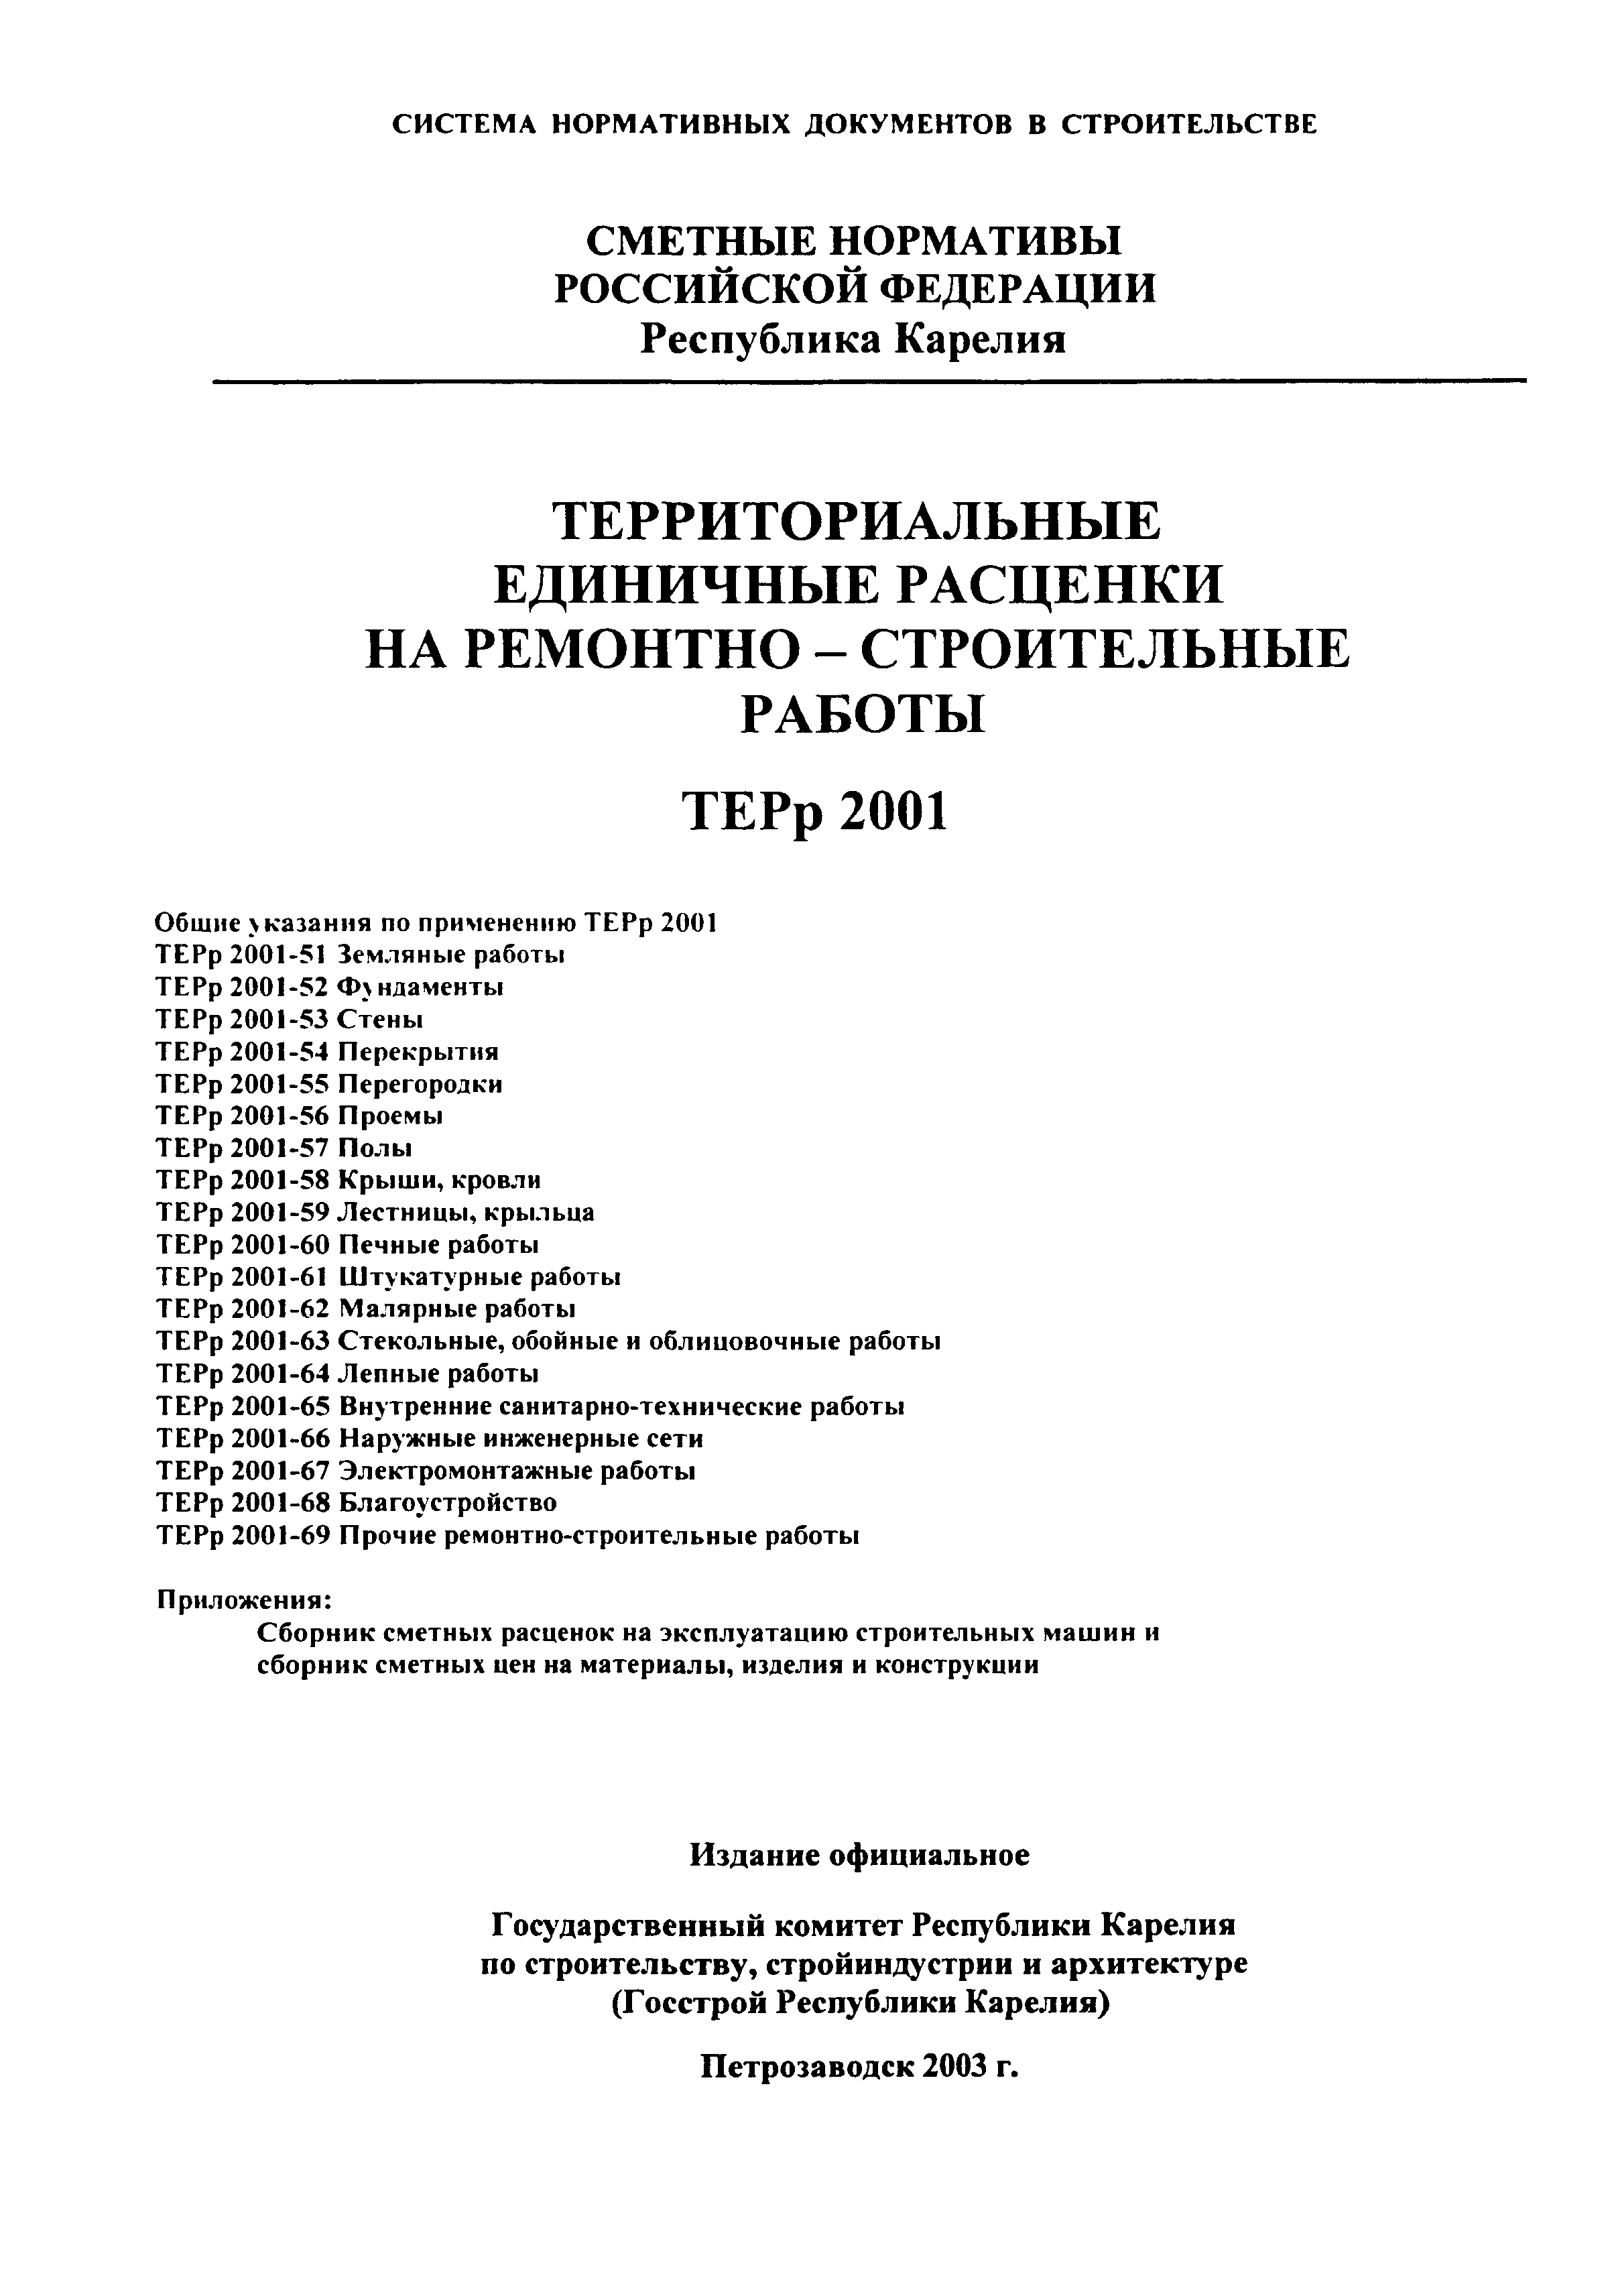 ТЕРр Республика Карелия 2001-55